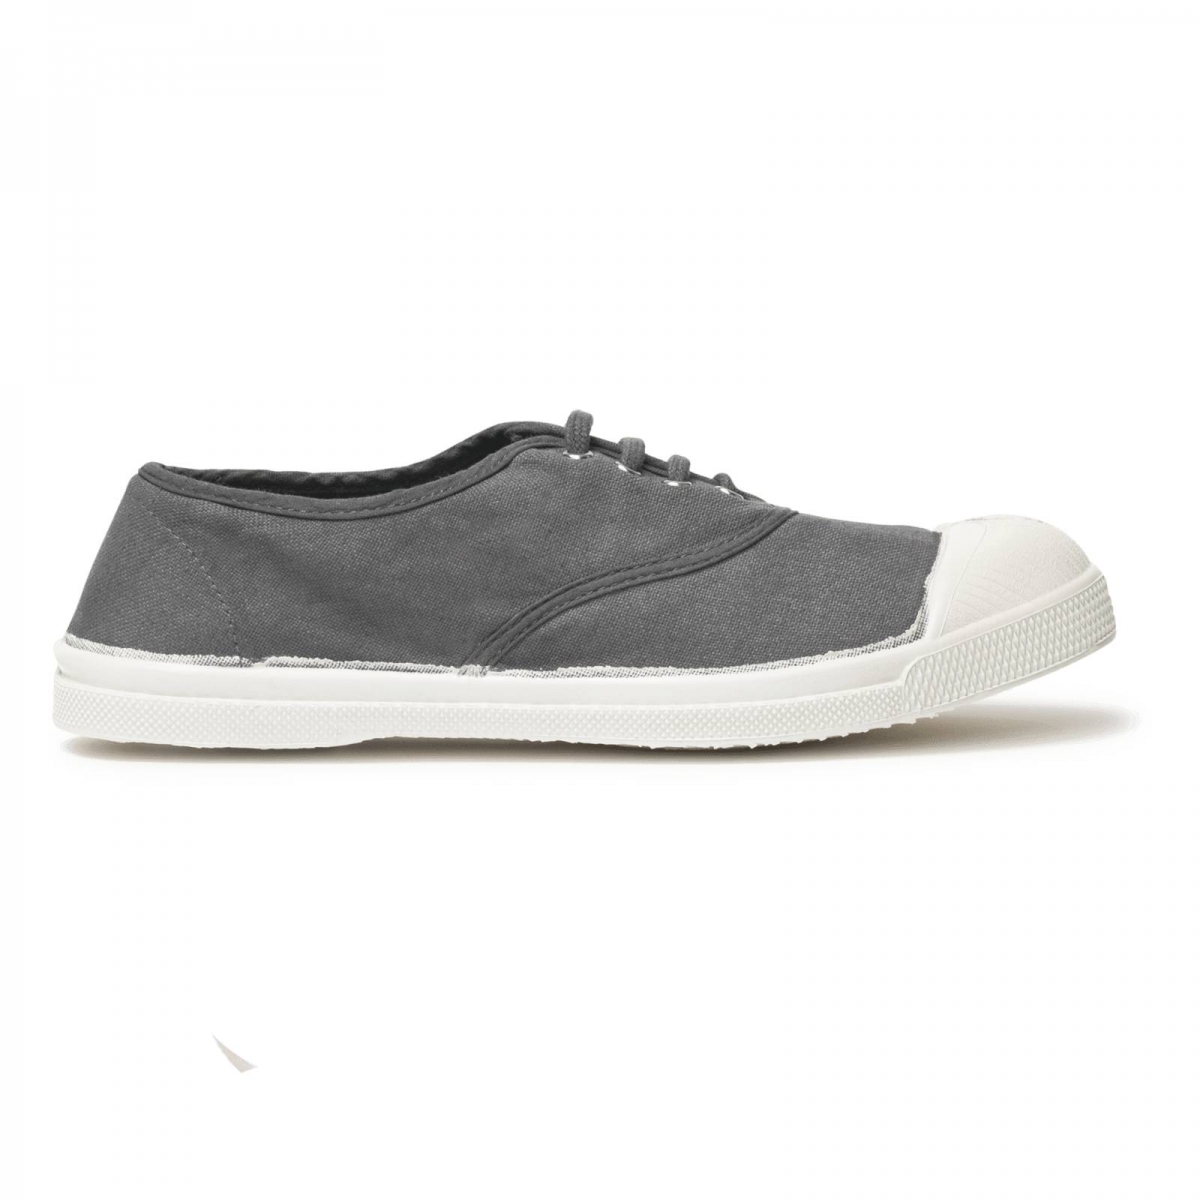 Bensimon zapatillas Lace tenis adulto gris F15004 - 0802